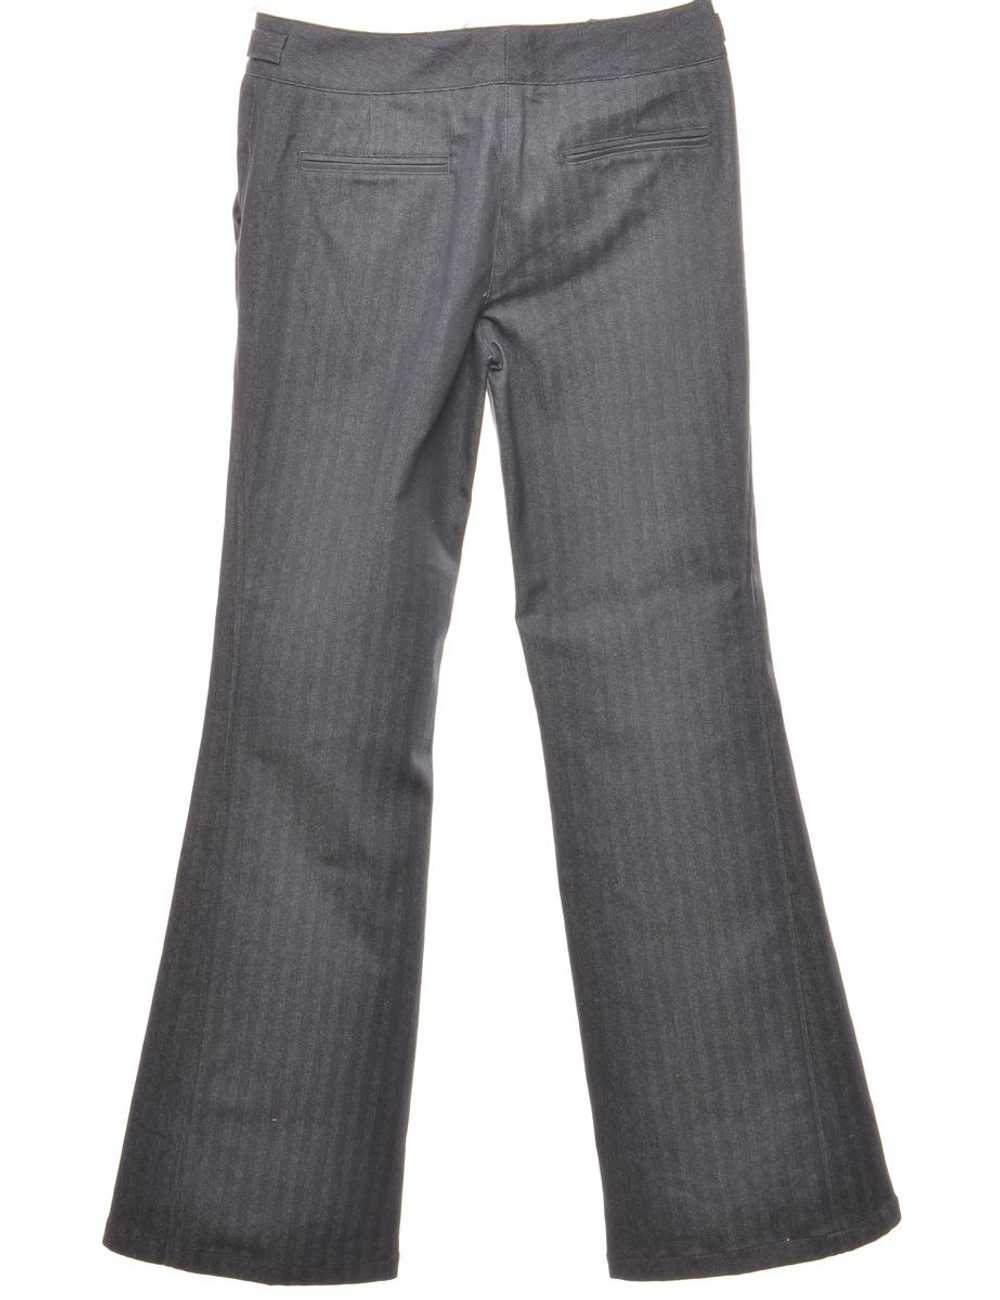 Grey Striped Flared Jeans - W32 L34 - image 2